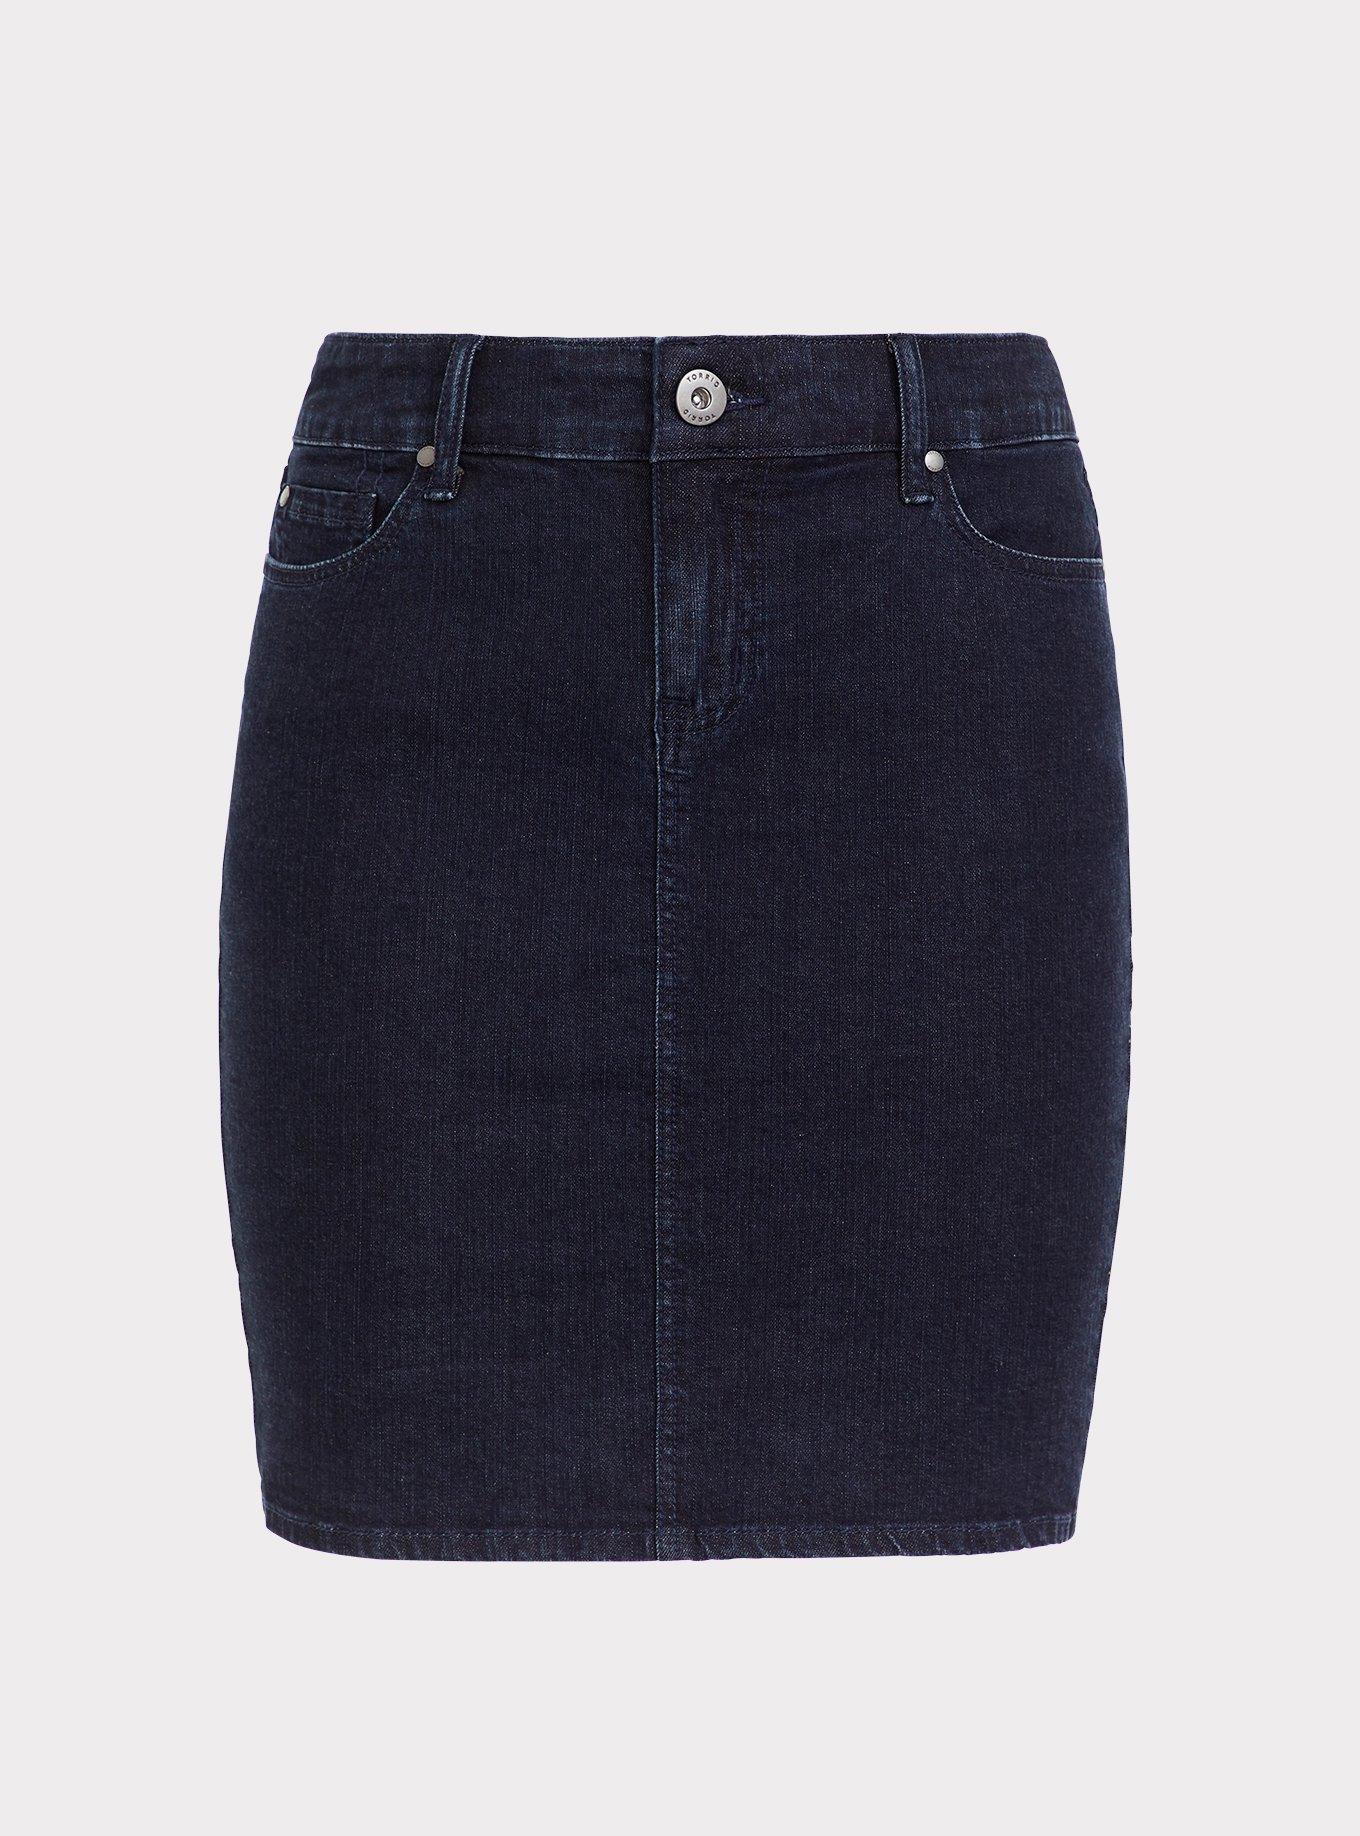 Plus Size - Dark Denim Mini Skirt - Torrid